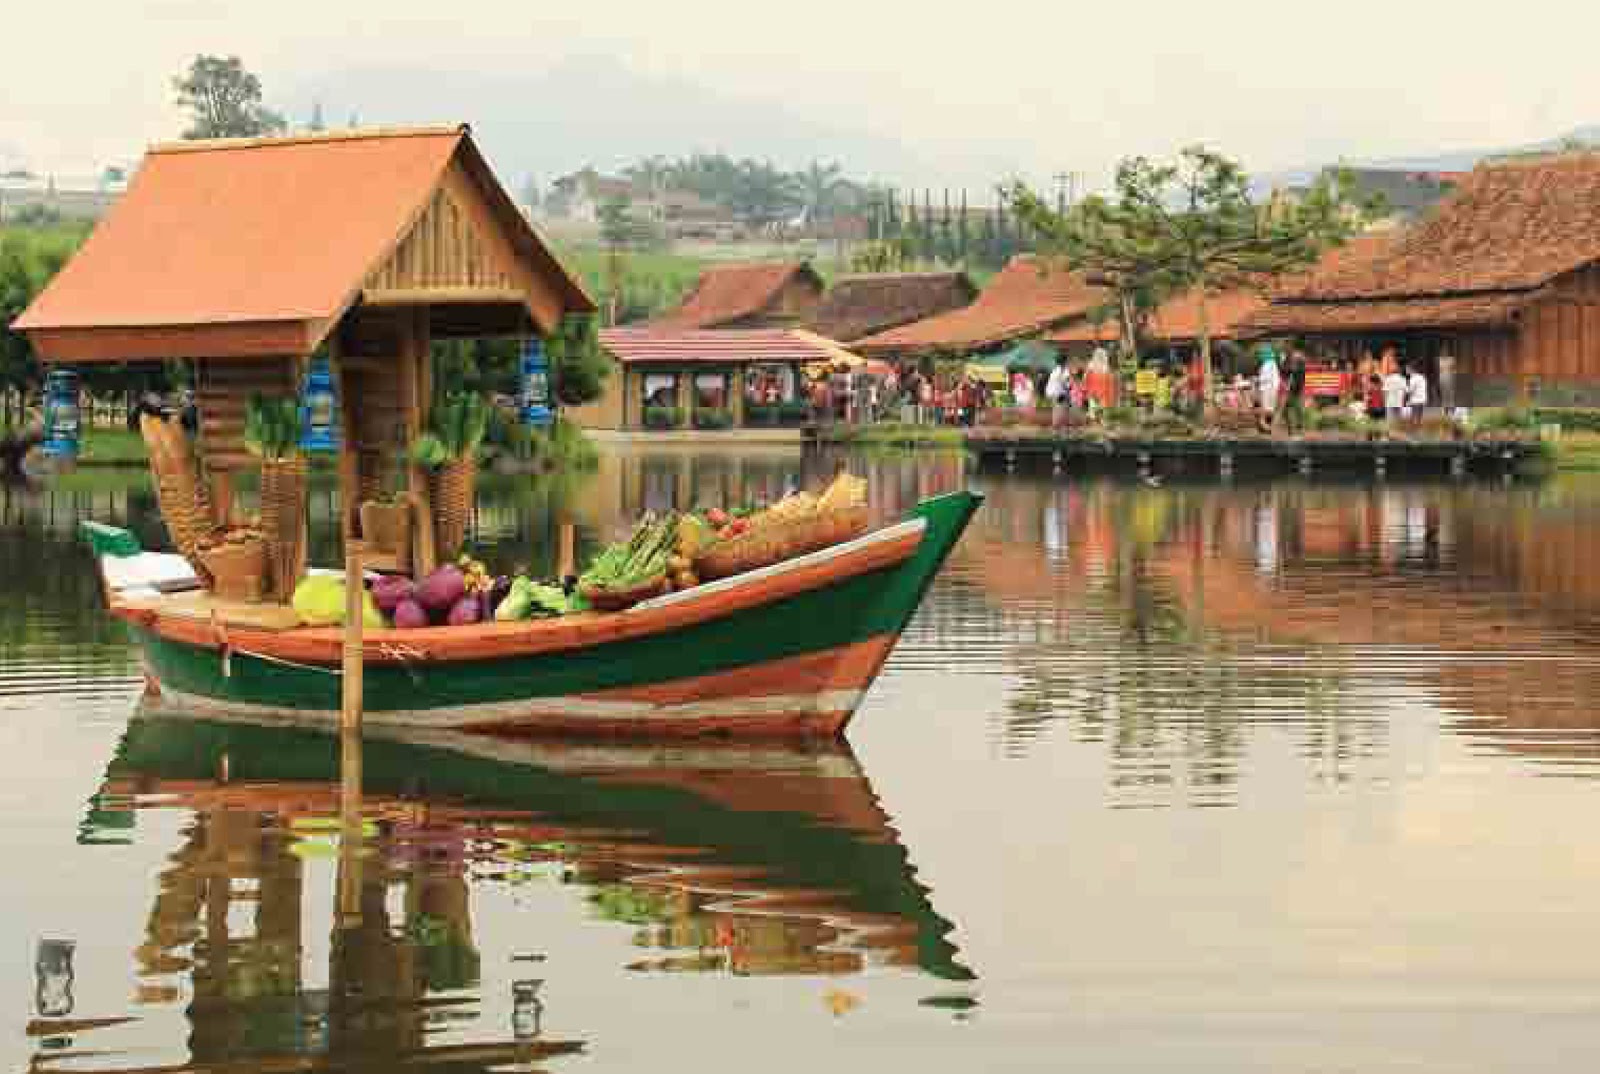 Ragam Wisata dan Kuliner Indonesia Floating market 